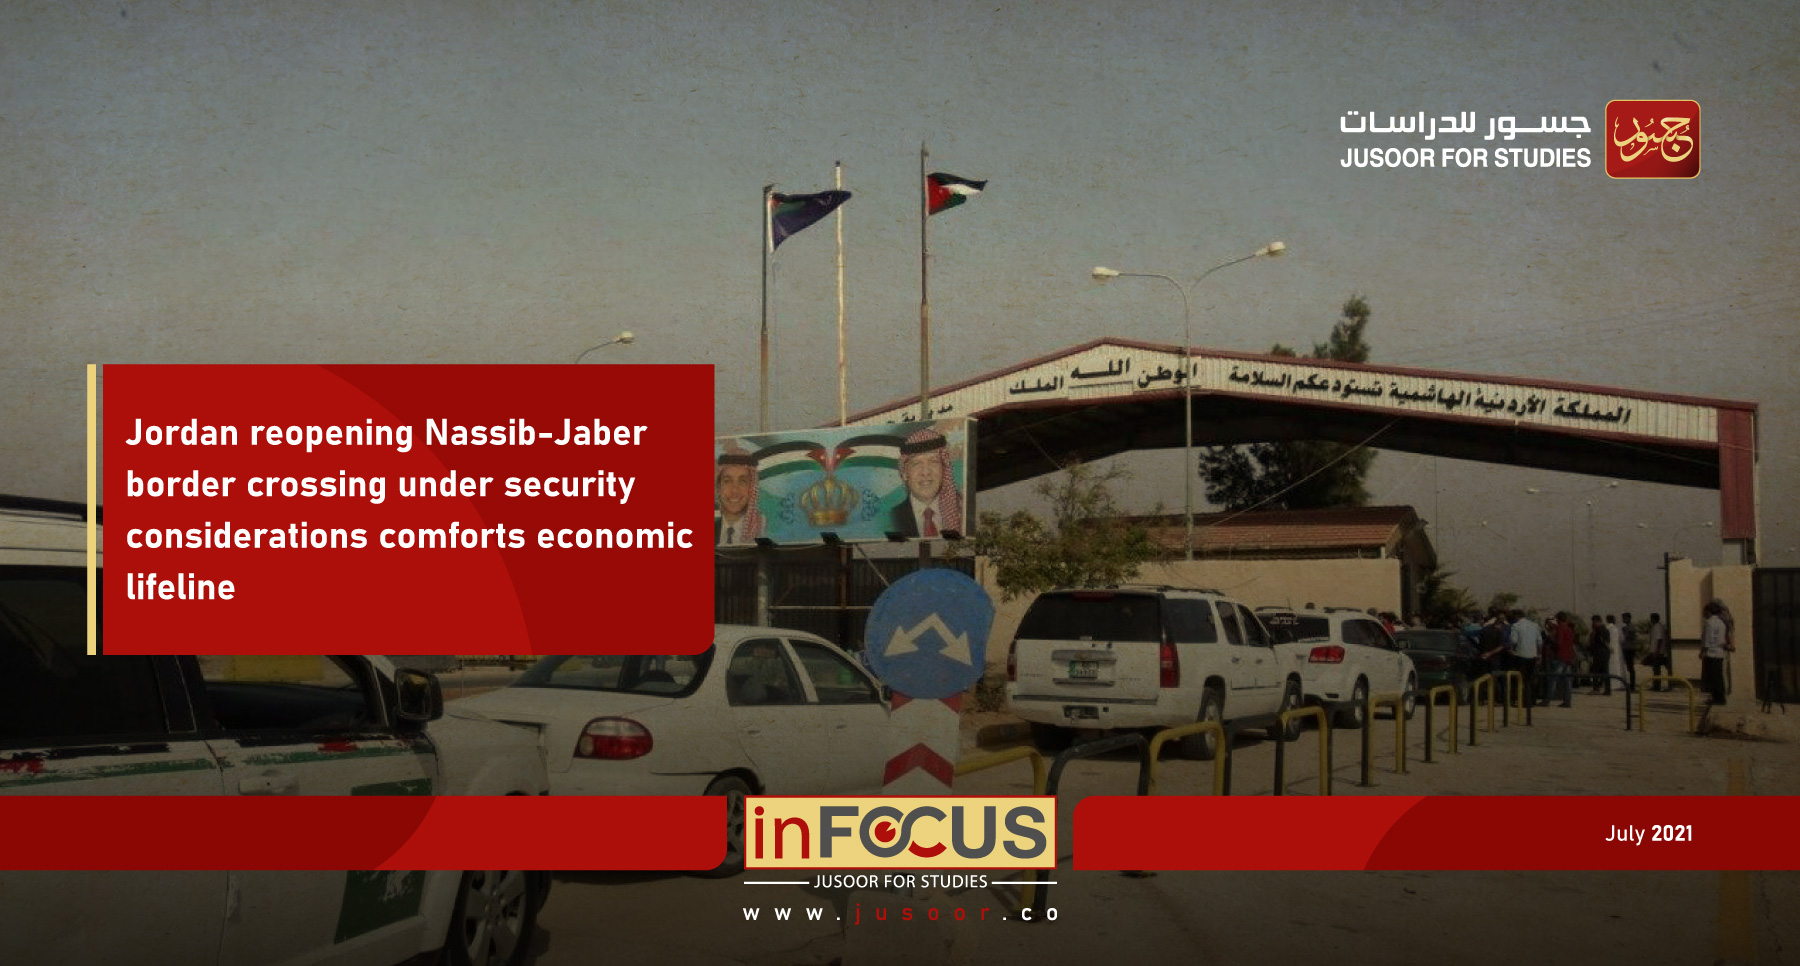 Jordan reopening Nassib-Jaber border crossing under security considerations comforts economic lifeline